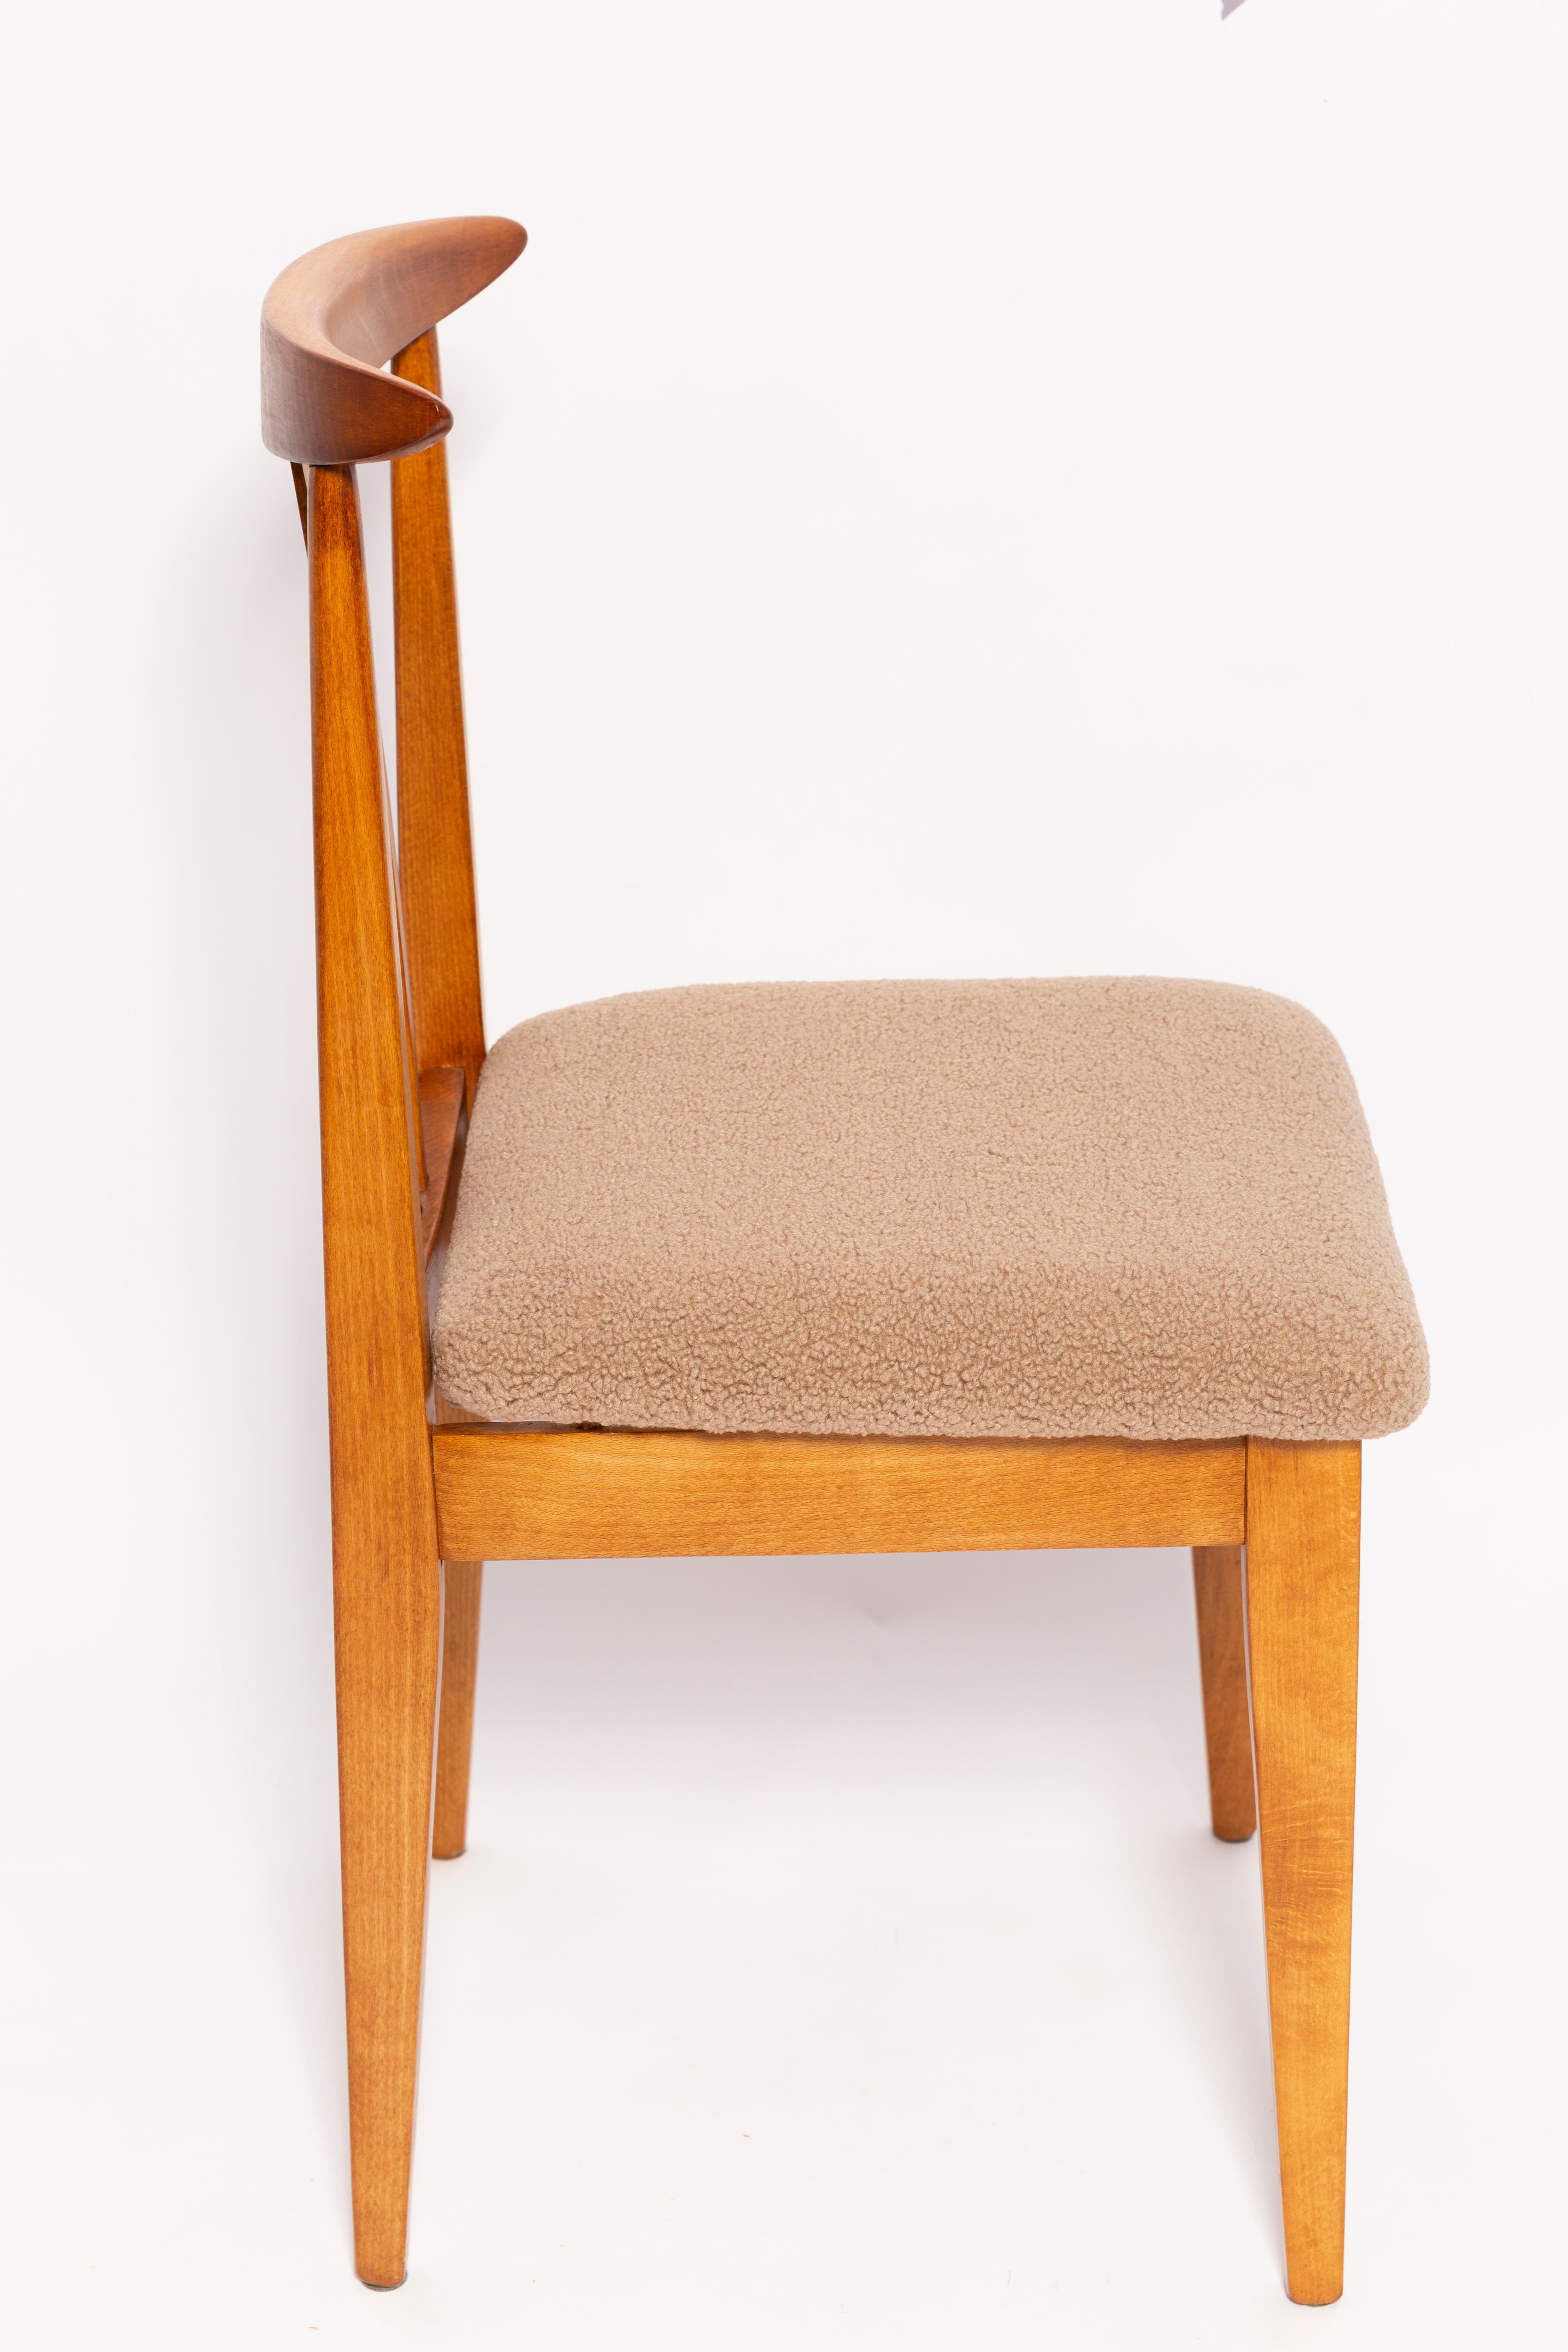 20th Century Six Mid-Century Latte Boucle Chairs, Medium Wood, M. Zielinski, Europe 1960s For Sale